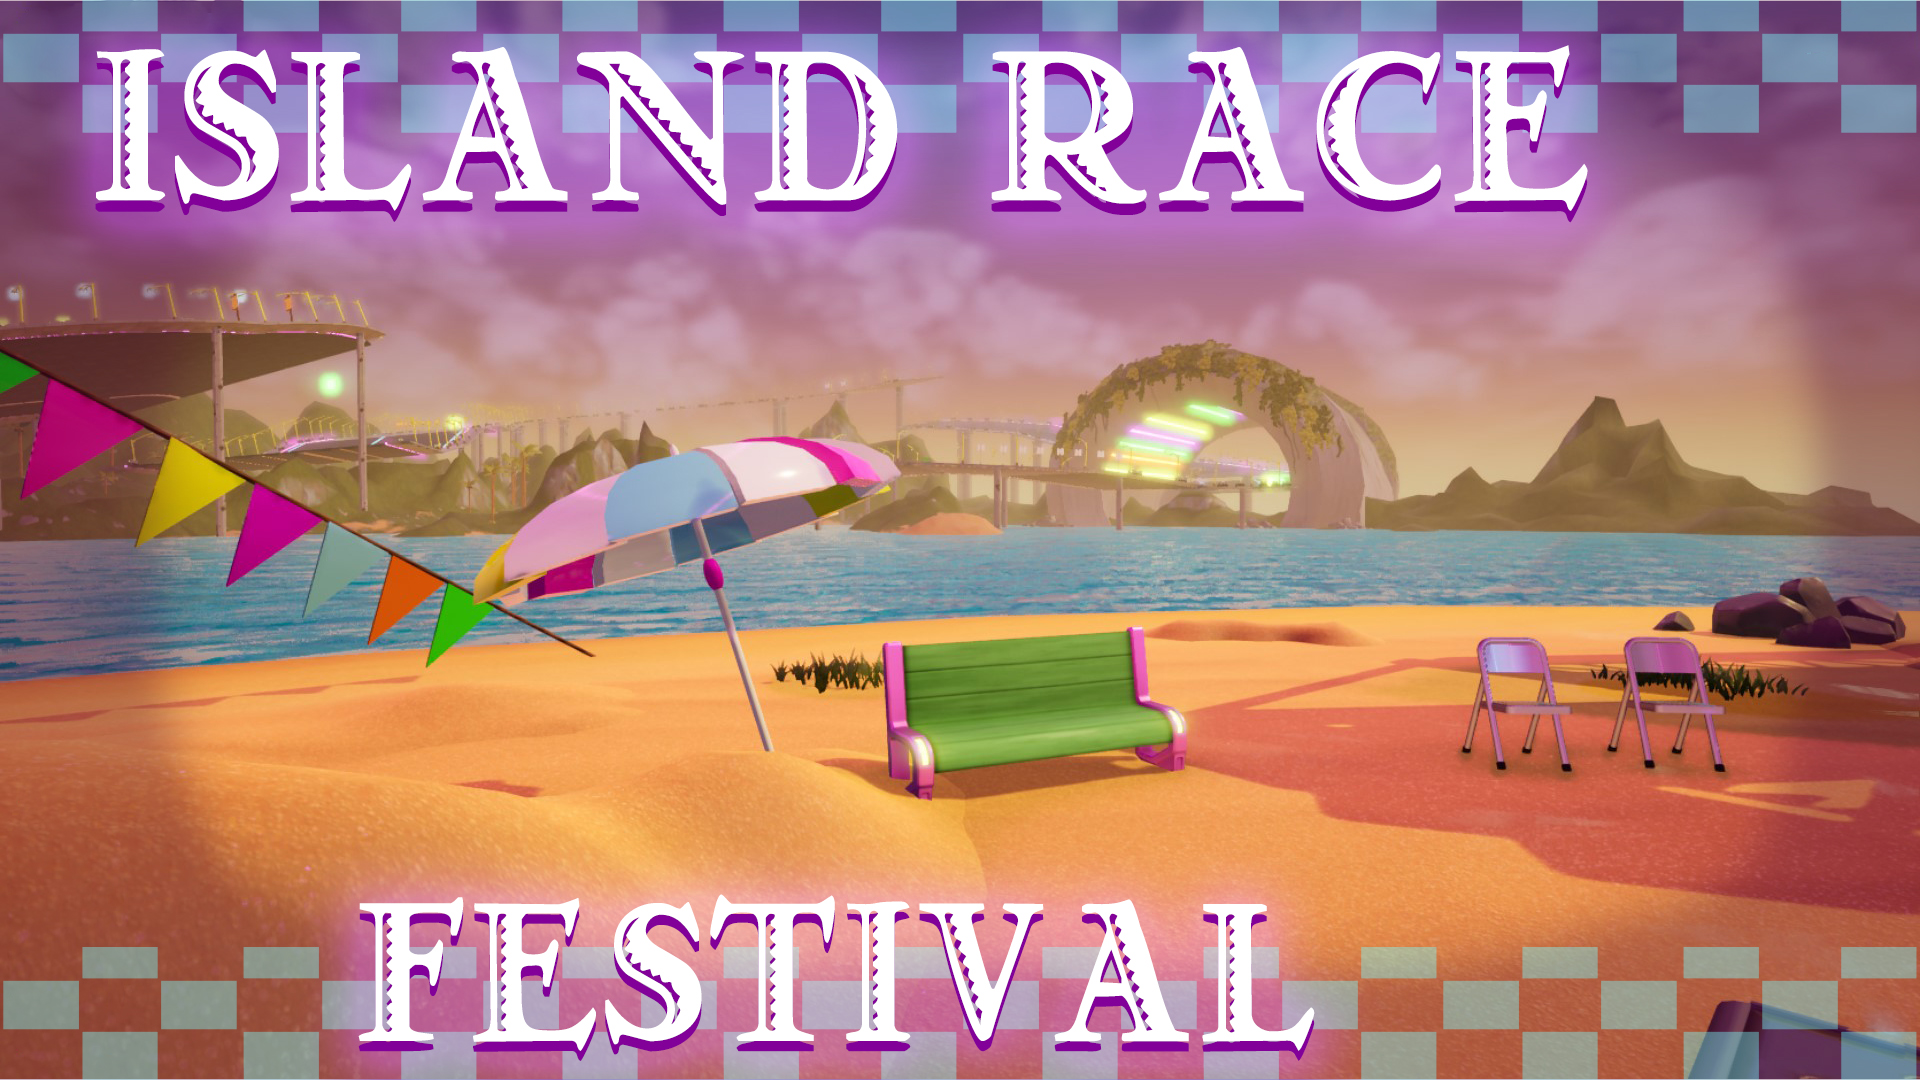 Island Race Festival